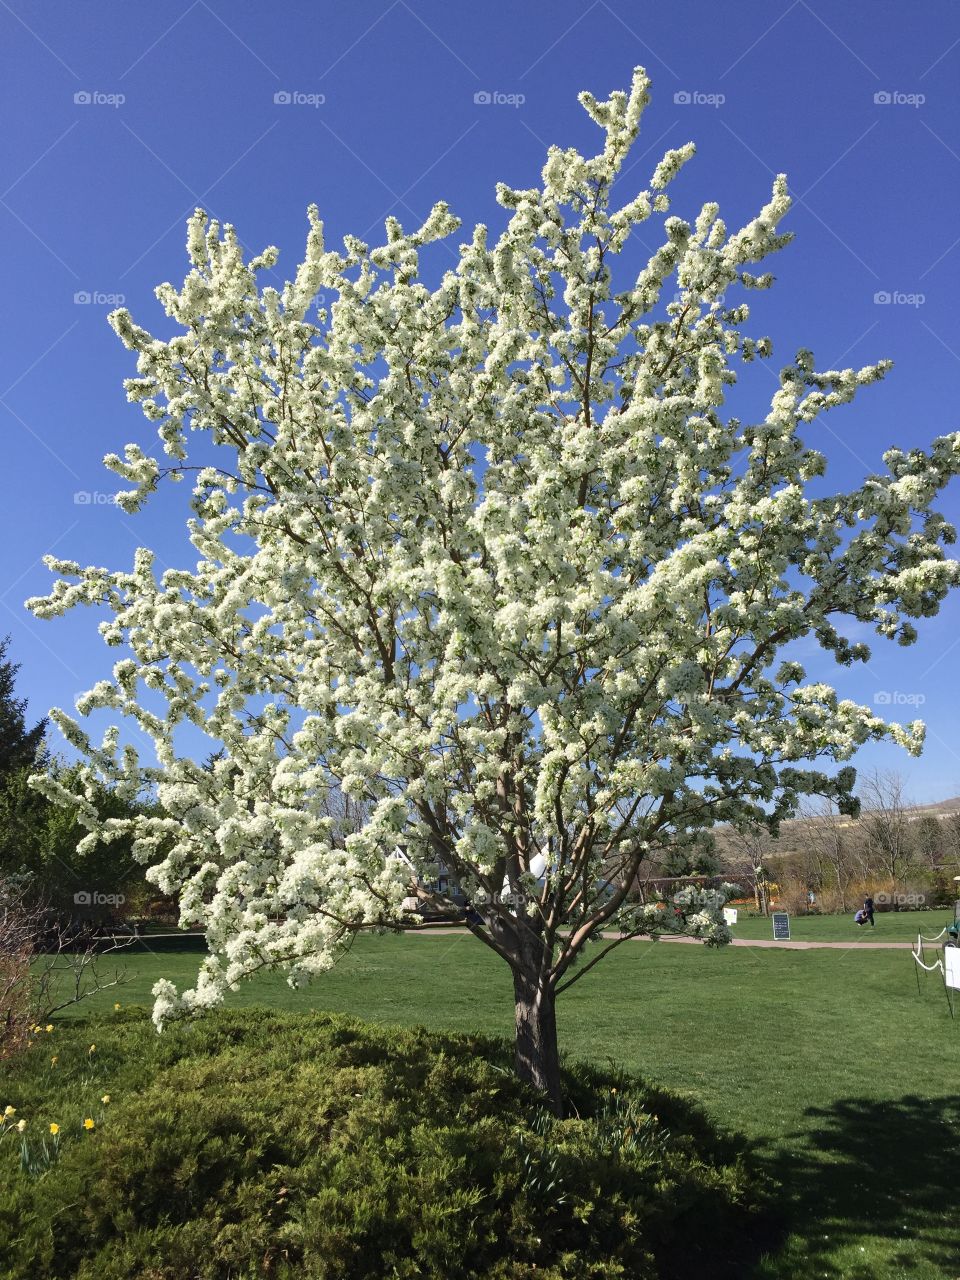 Spring garden. Blooming tree. White flowers, green grass.